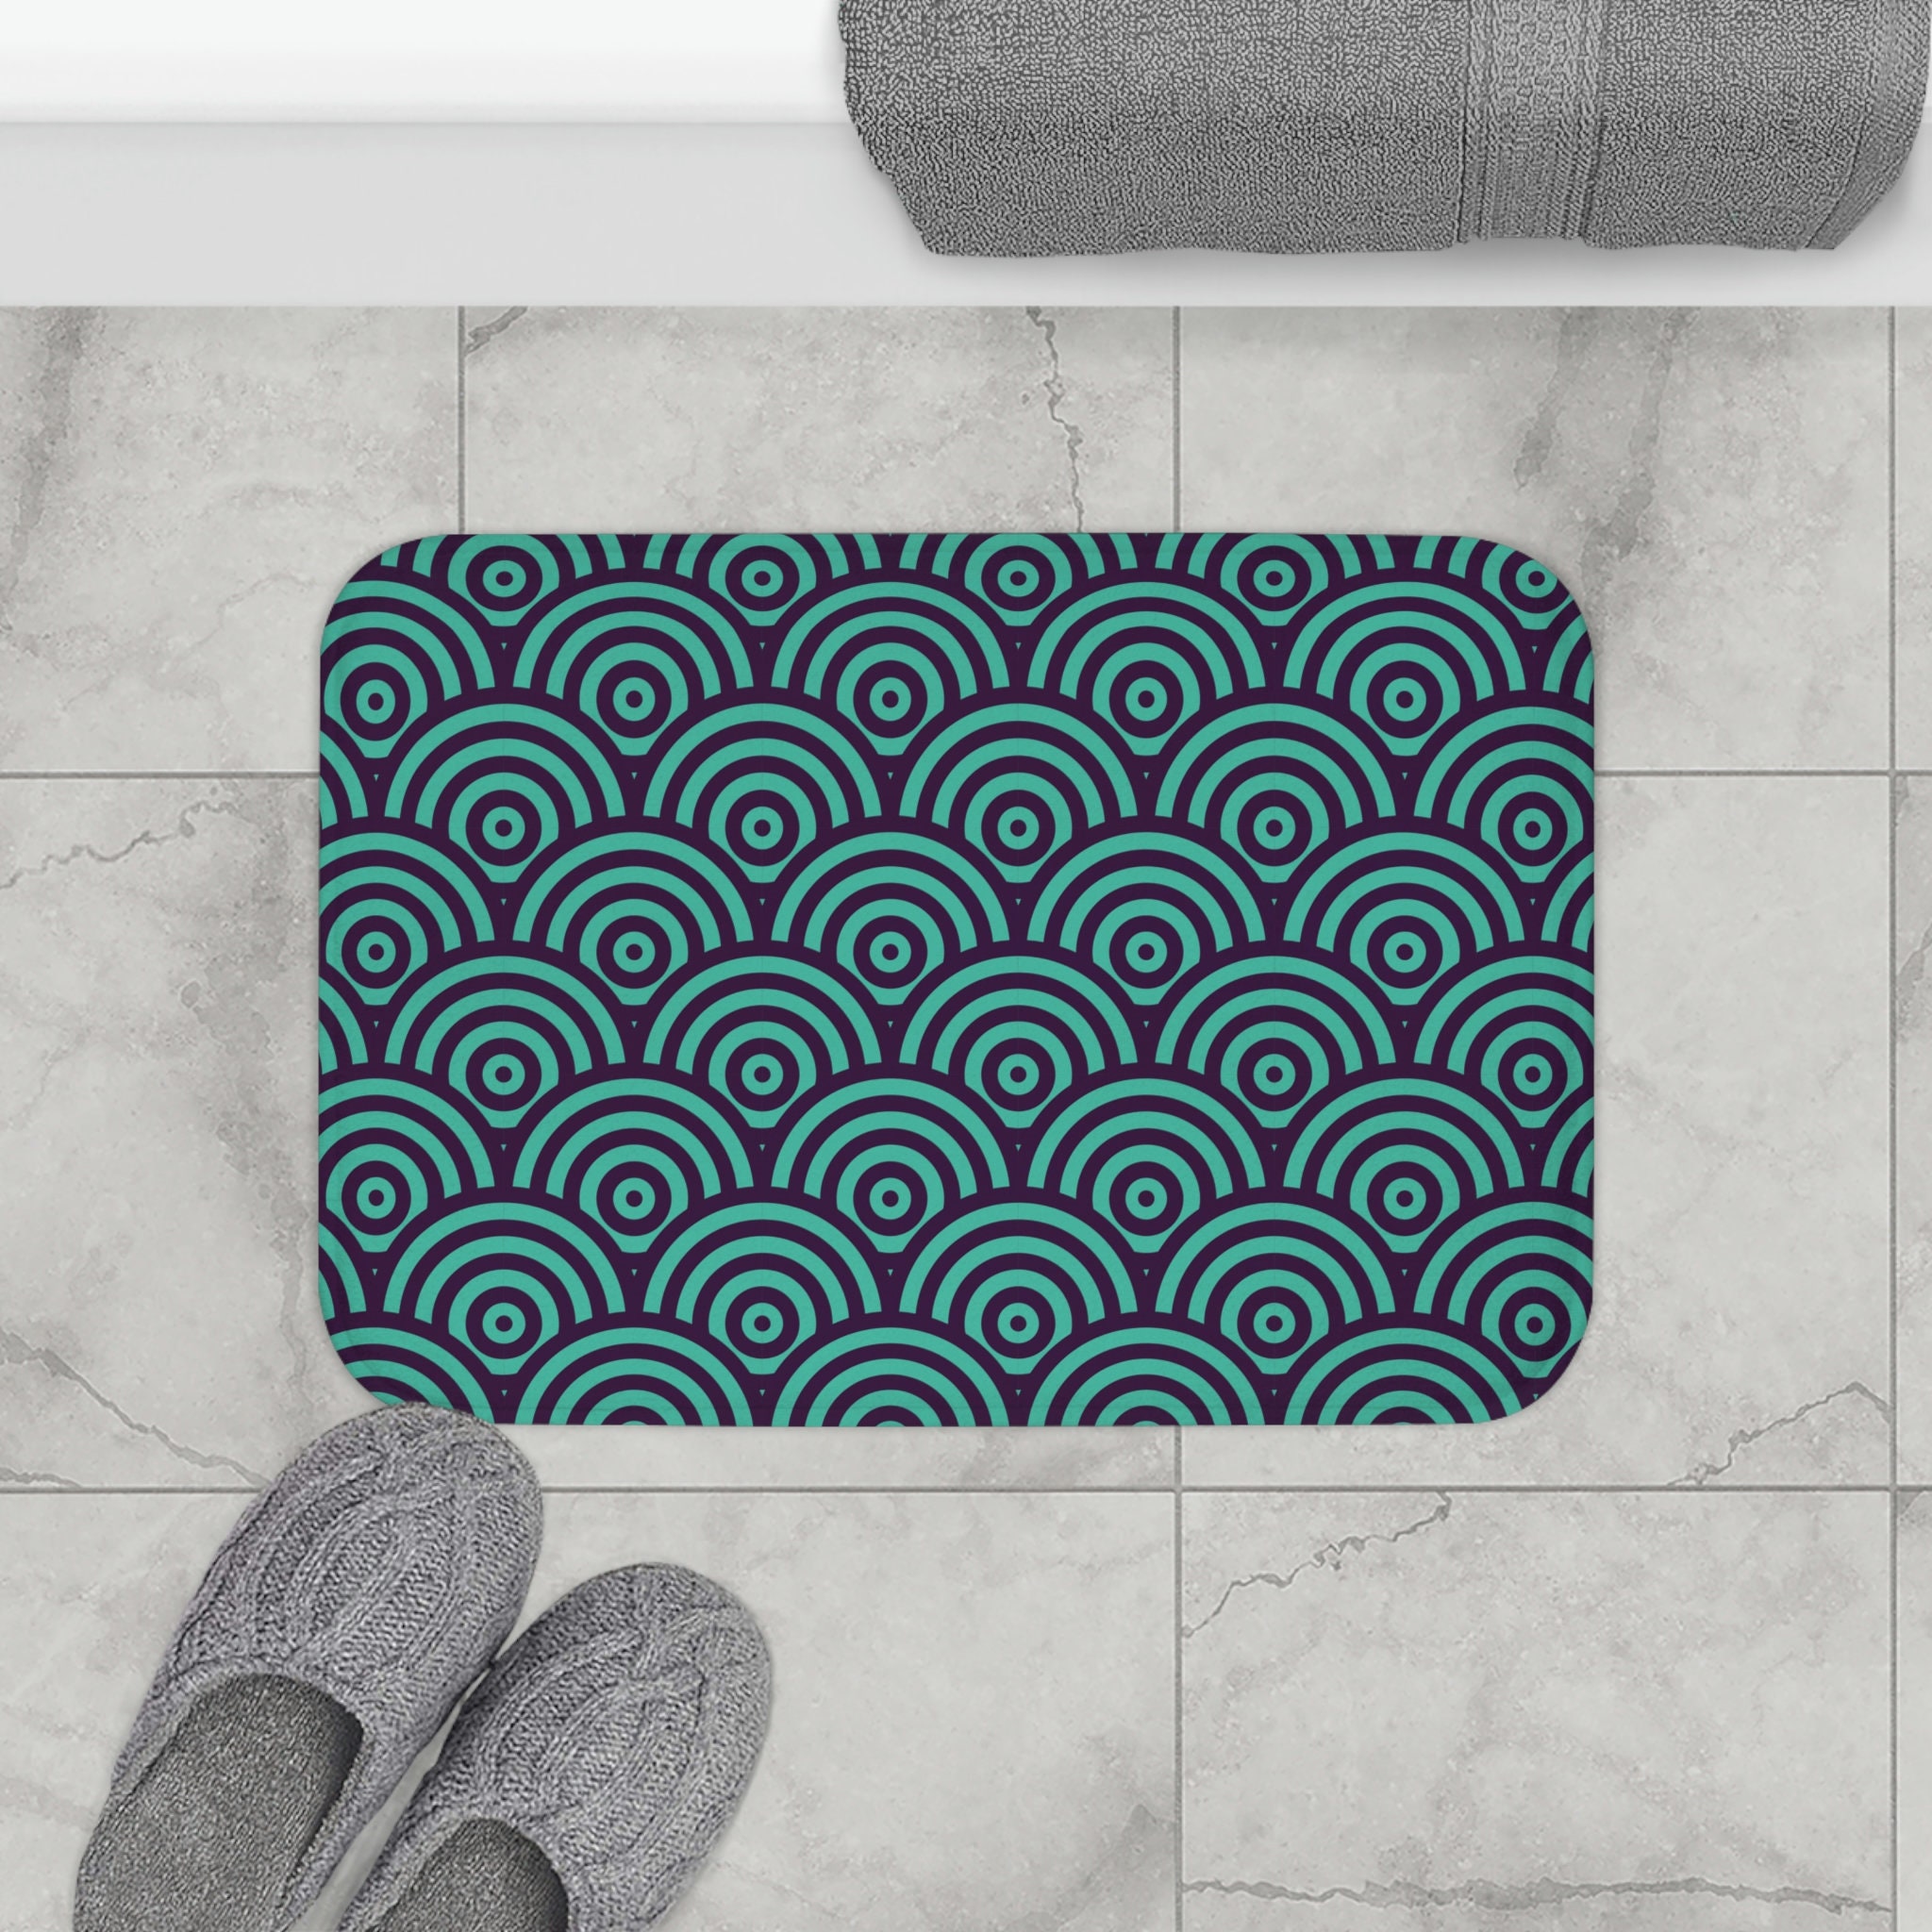 Japanese Wave Teal Bath Mat: Geometric Turquoise Bathroom Decor, Non-slip  Microfiber Memory Foam, Housewarming Gift, Oriental Interior Ideas 